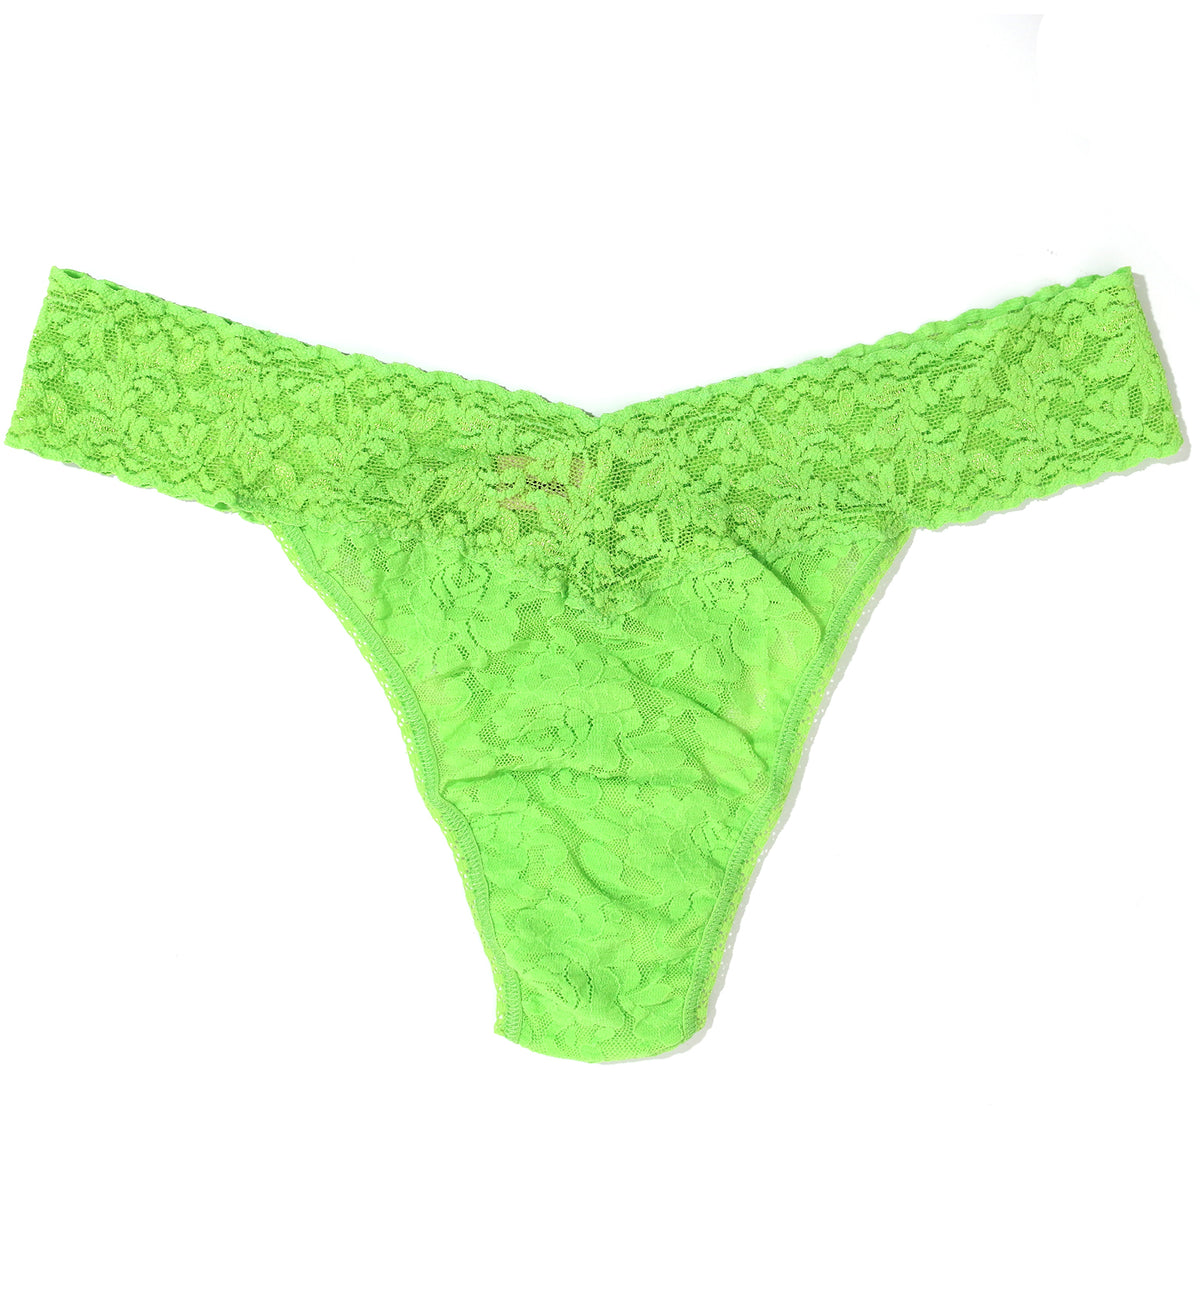 Hanky Panky Signature Lace Original Rise Thong (4811P),Lush Green - Lush Green,One Size